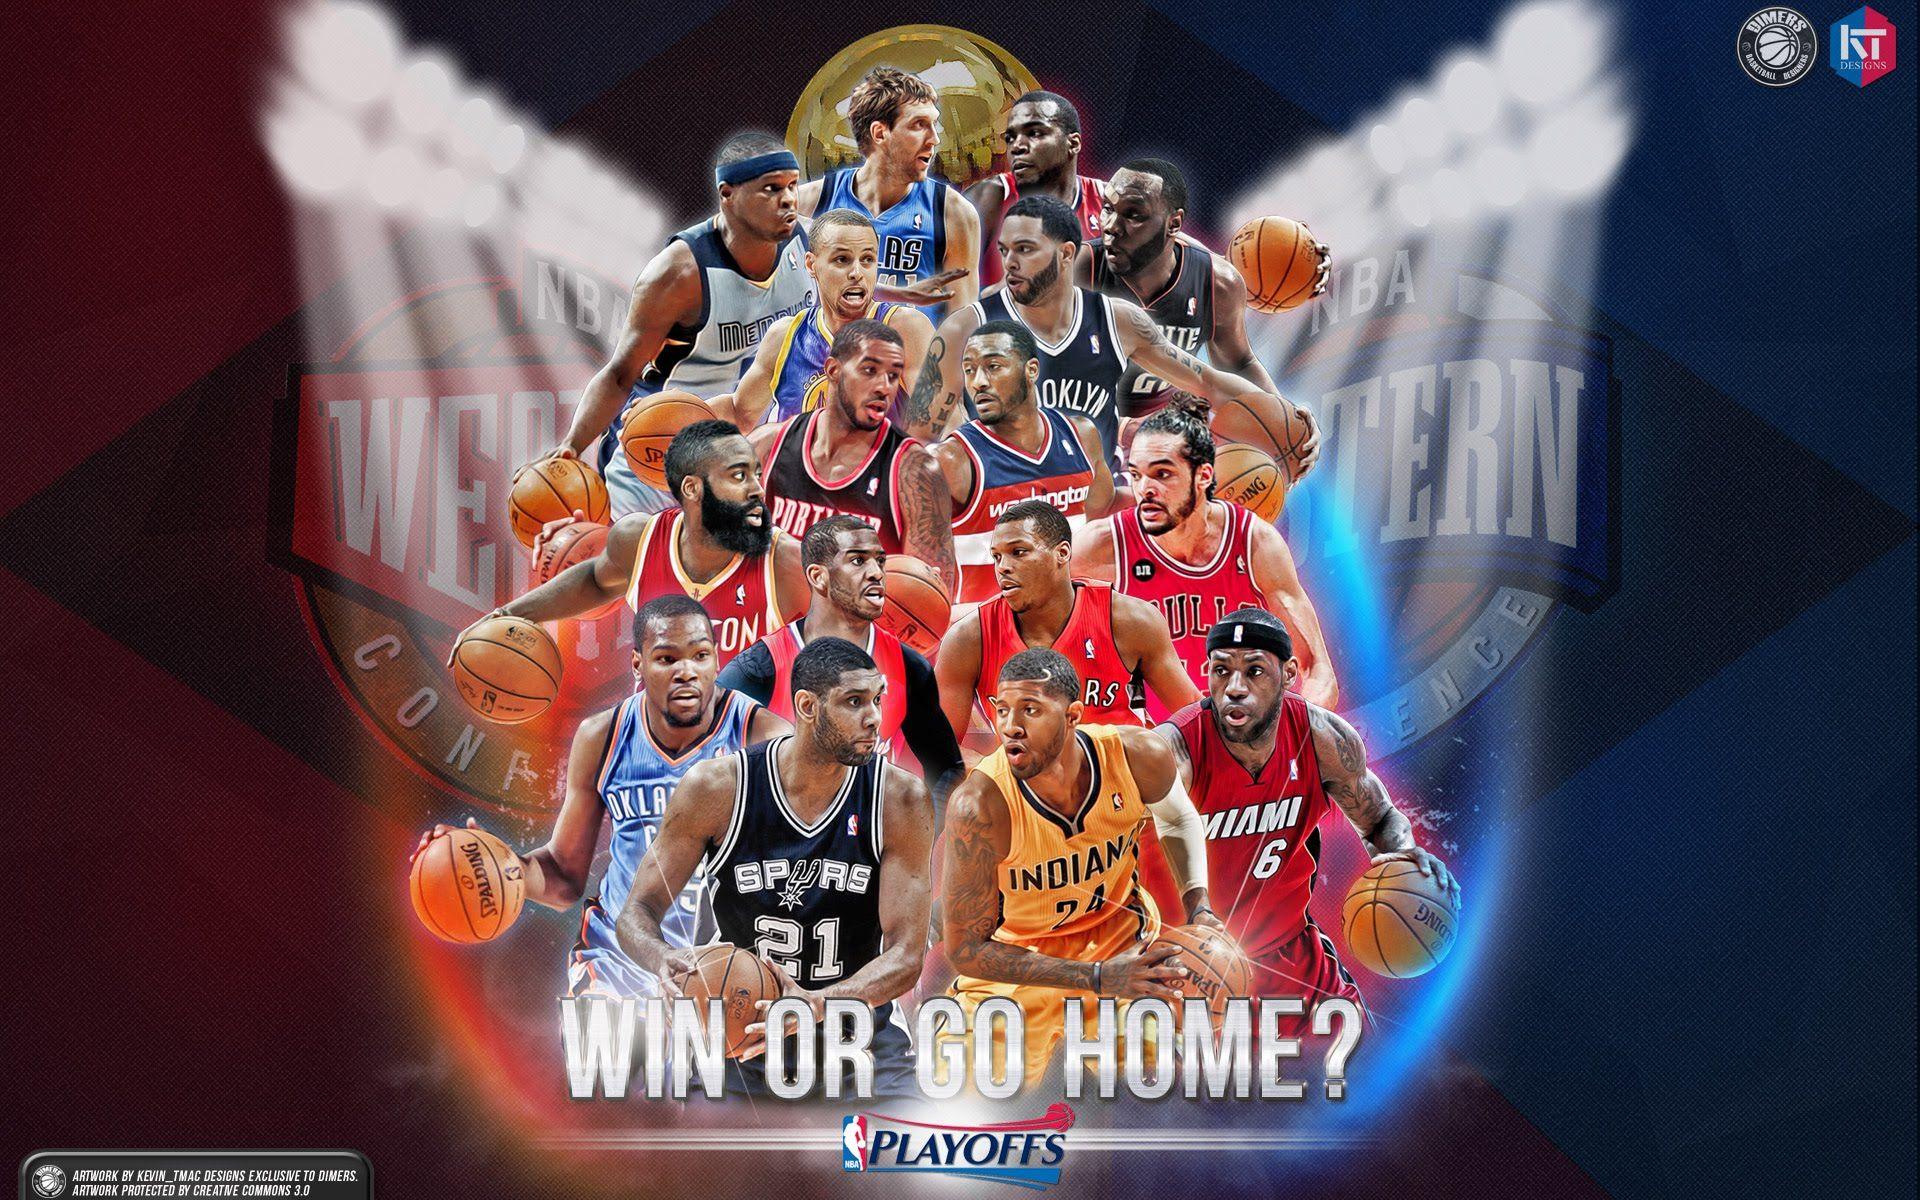 NBA Wallpaper 2015